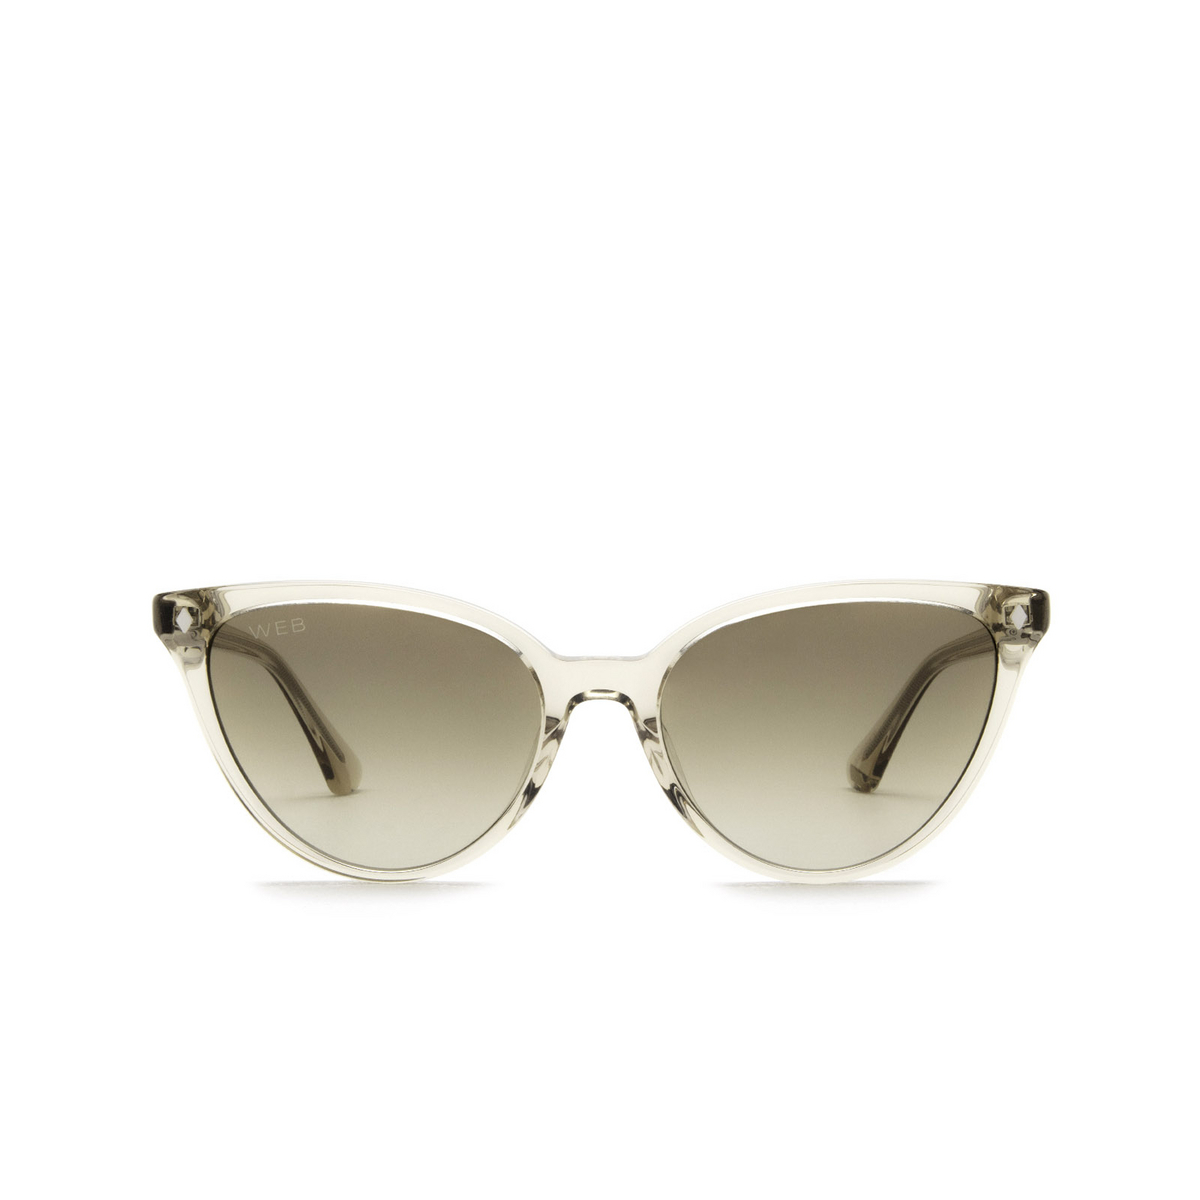 Web® Cat-eye Sunglasses: WE0329 color 39P Transparent Yellow - front view